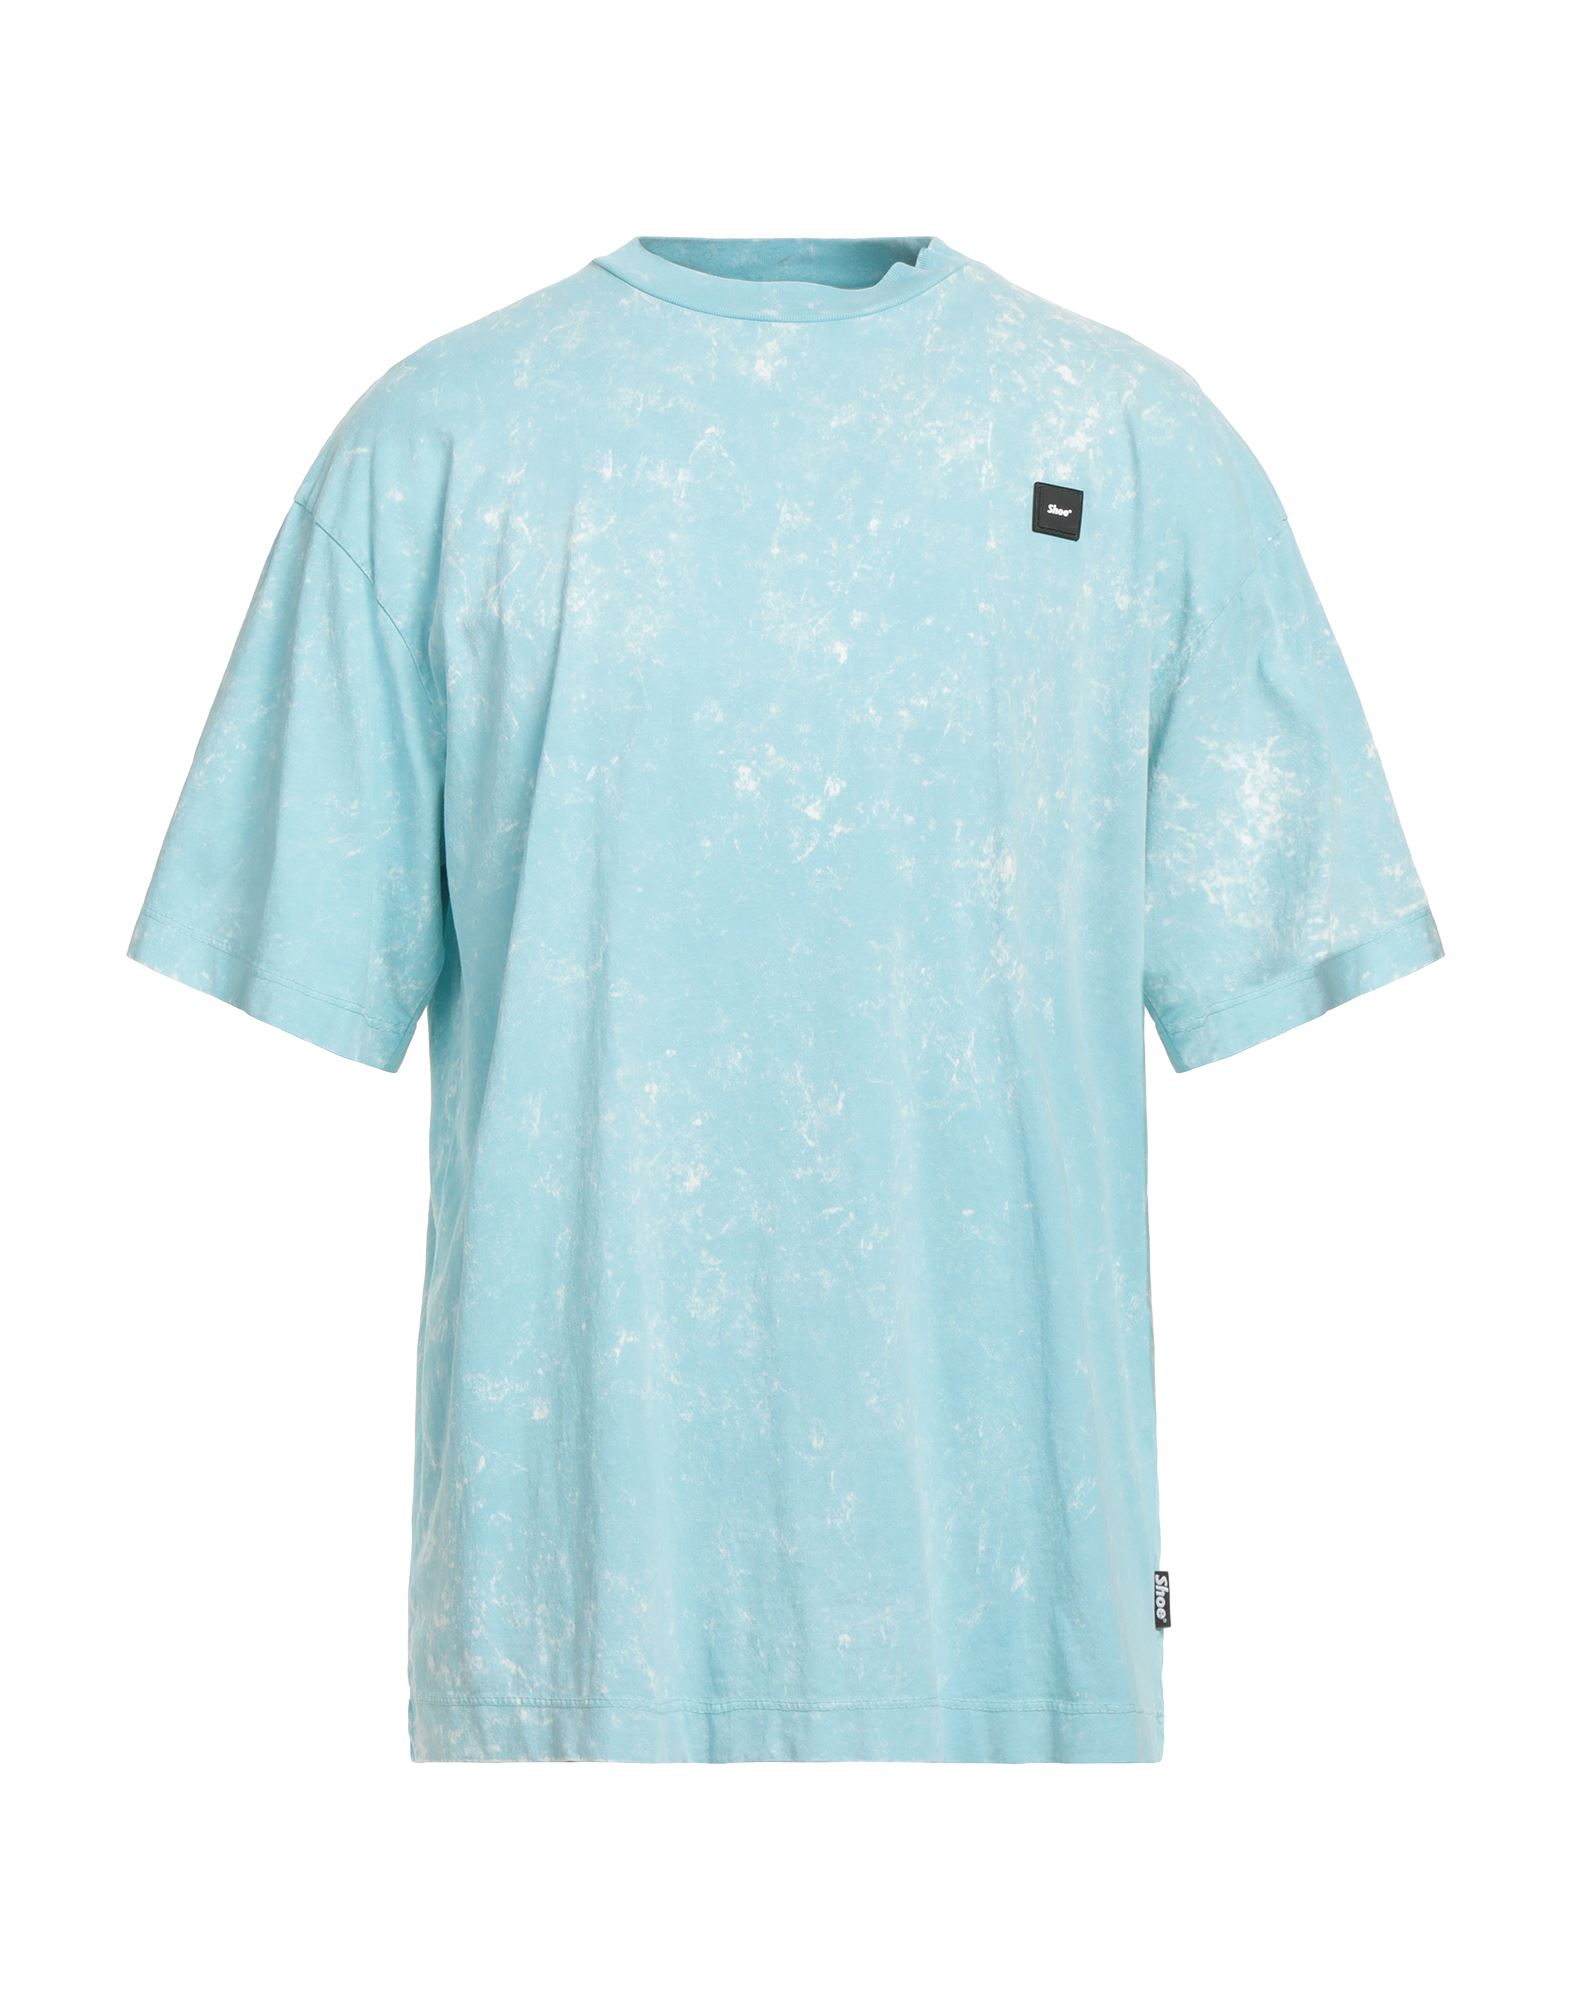 Shoe® Shoe Man T-shirt Turquoise Size S Cotton In Blue